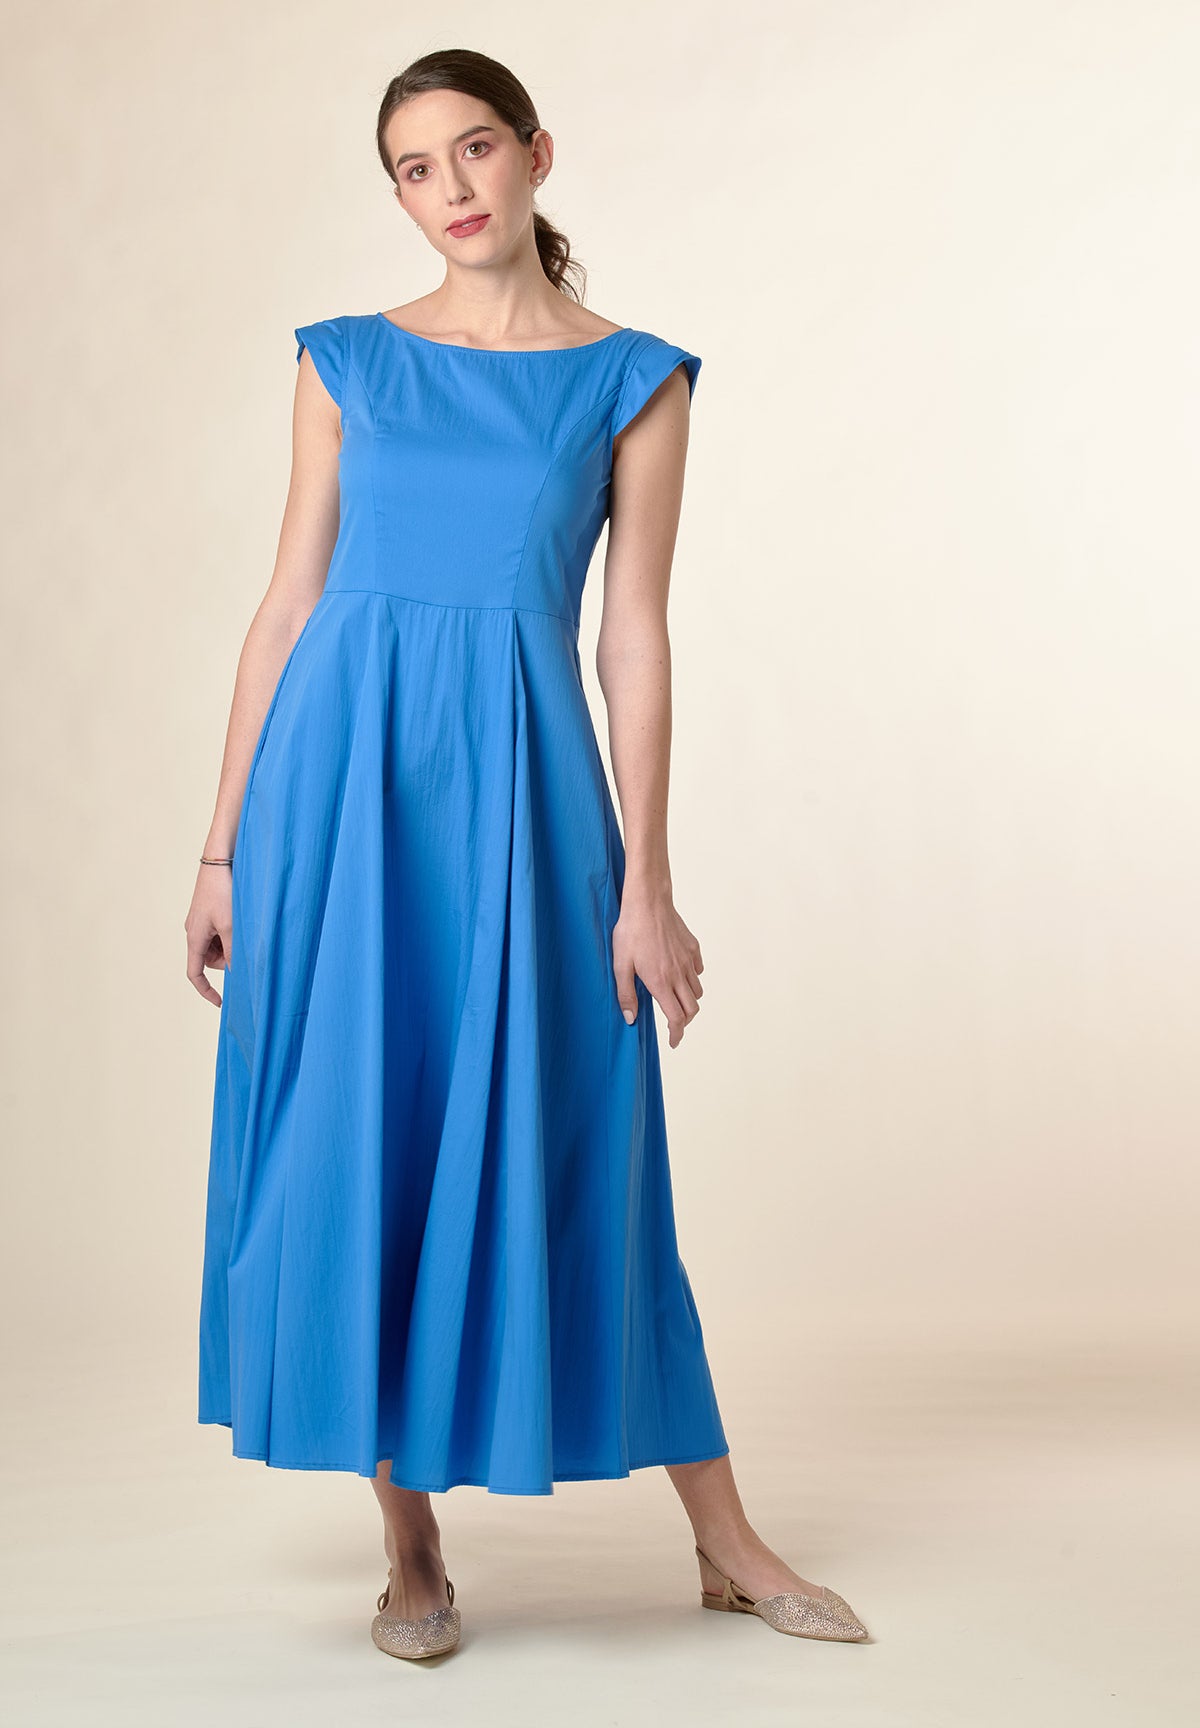 Langes hellblaues Kleid mit Klappärmeln